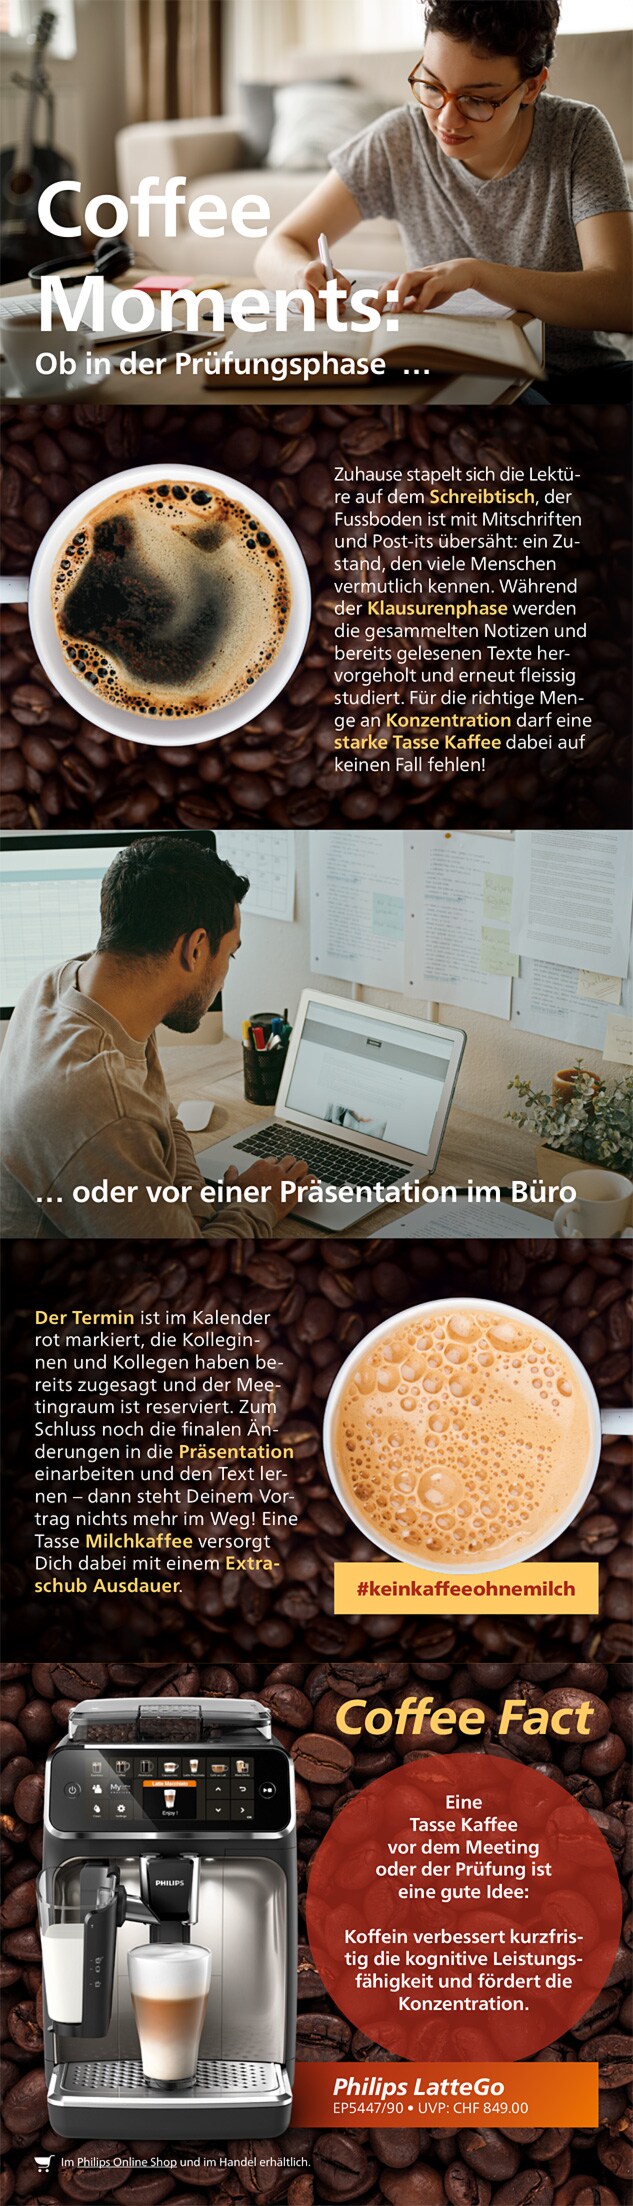 Philips Themensheet Coffee Moments - Teil 5